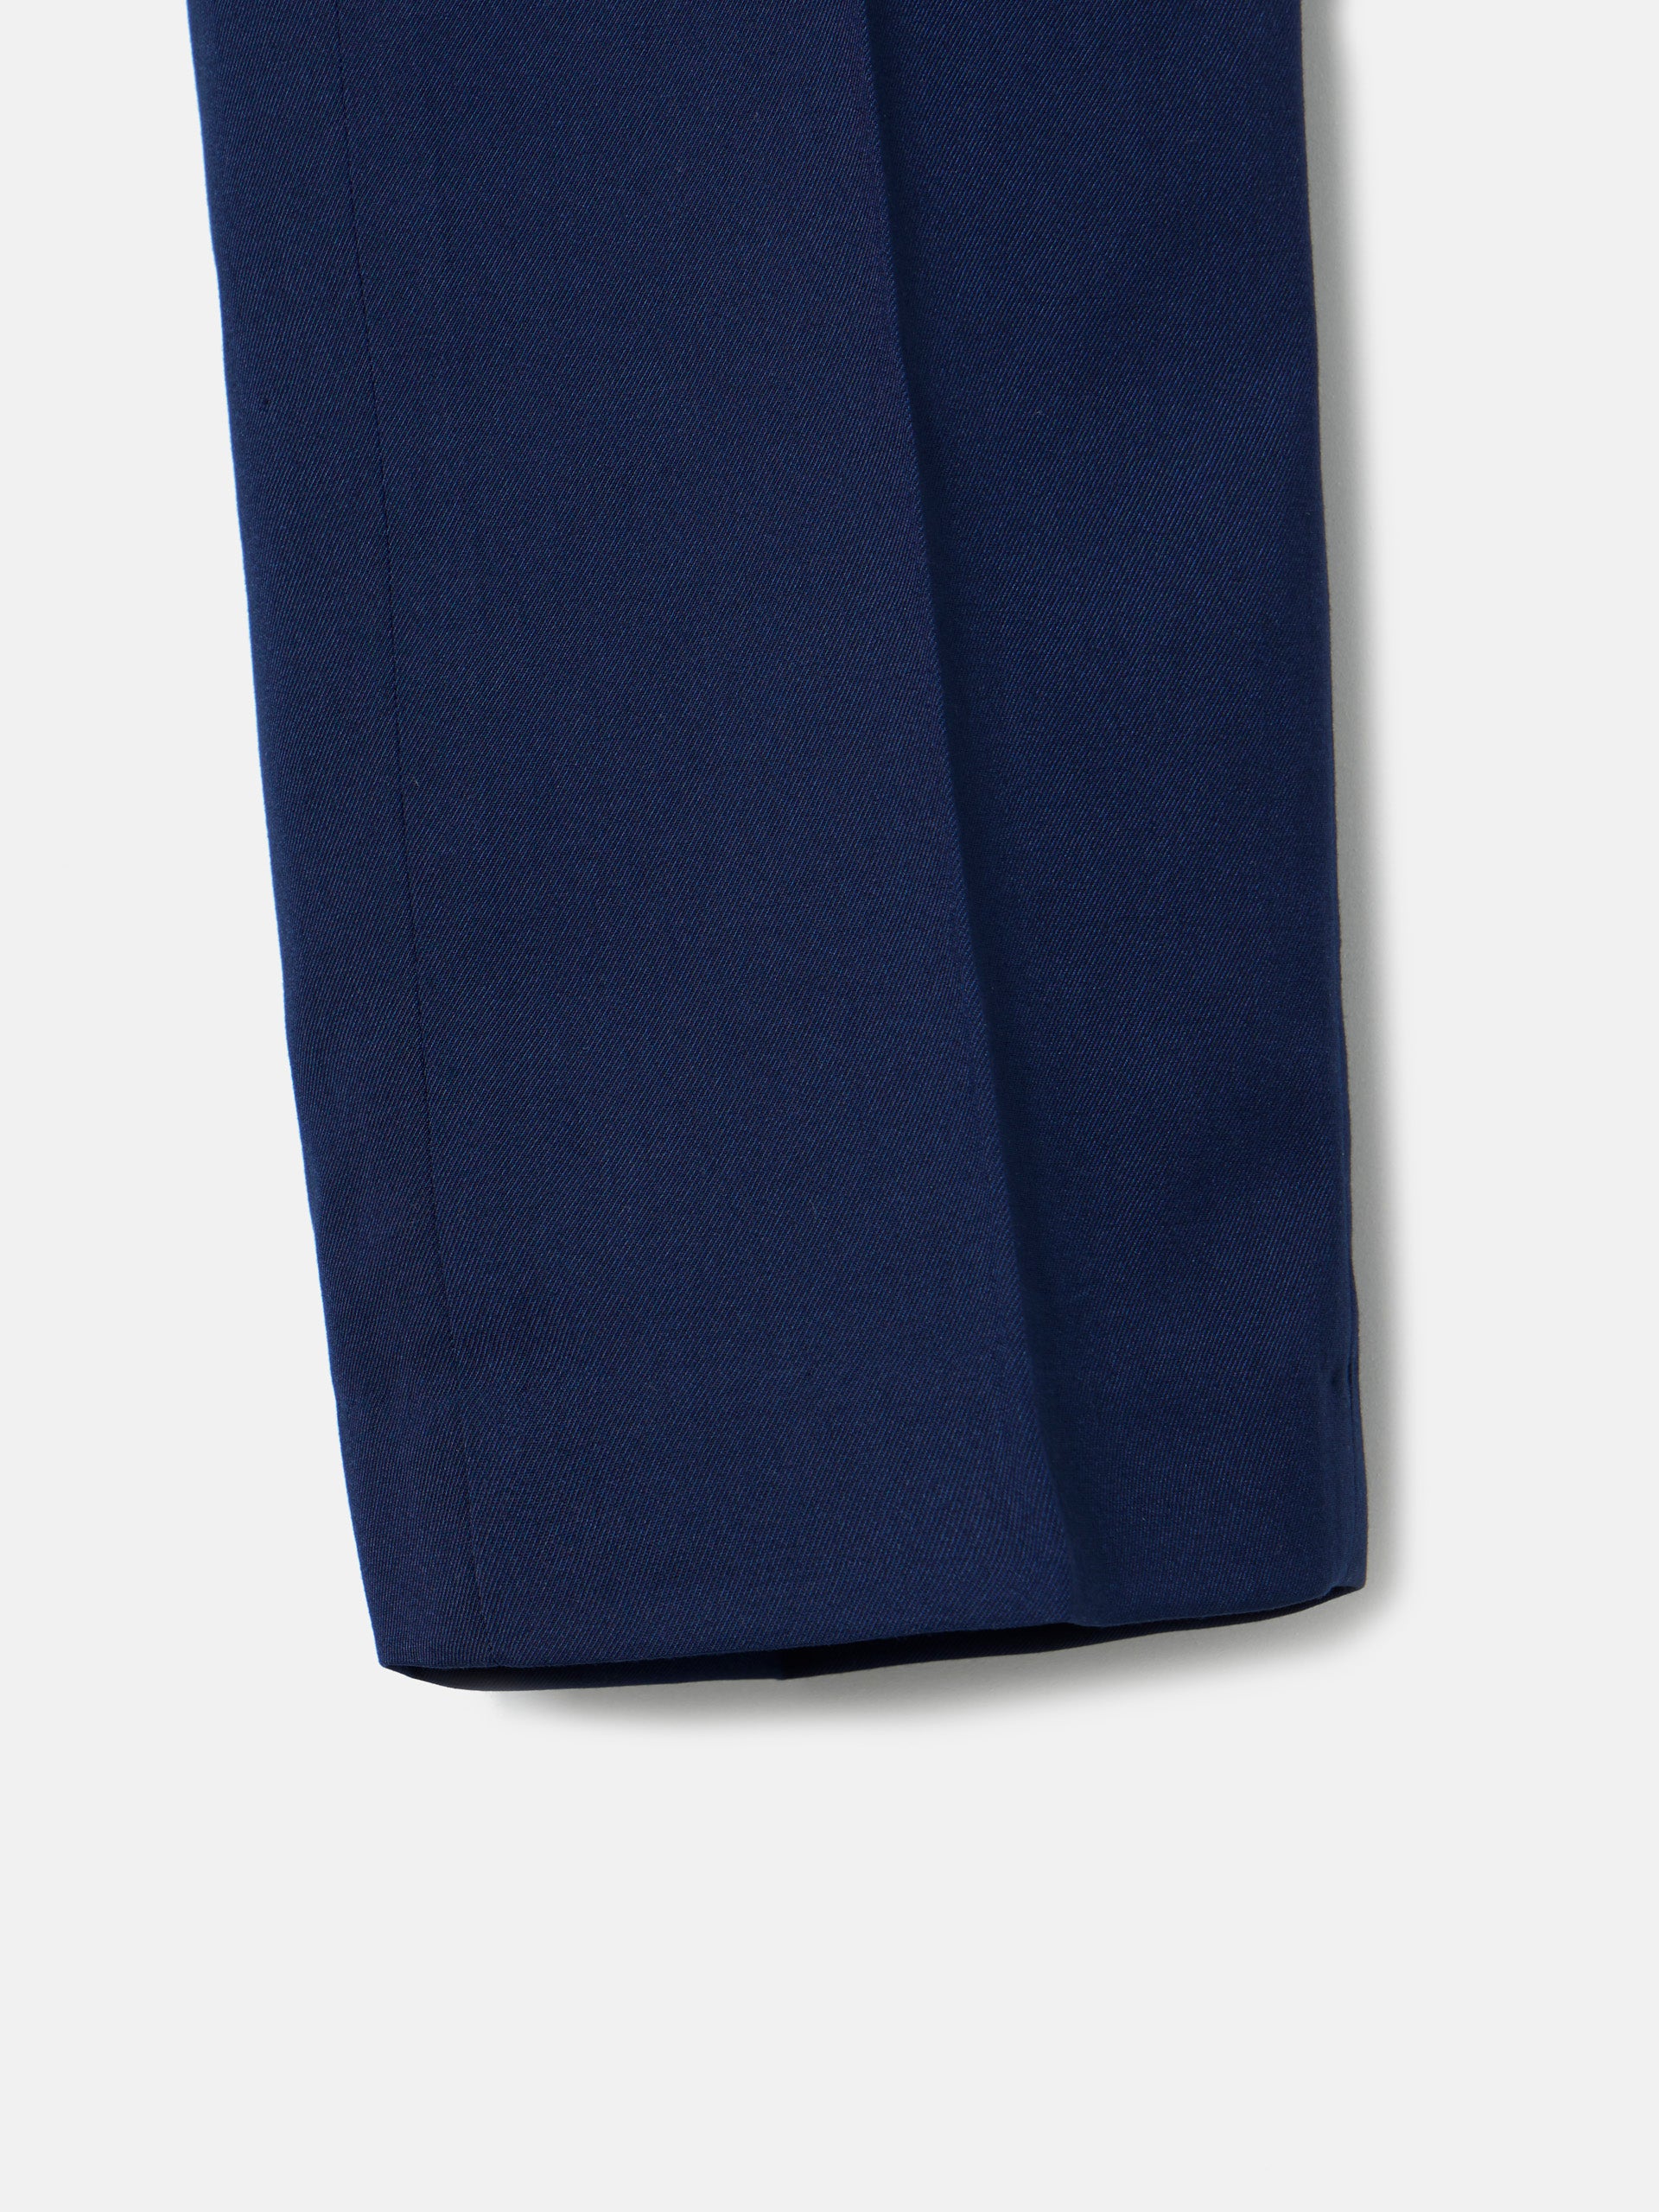 Pantalon traje essential azul medio